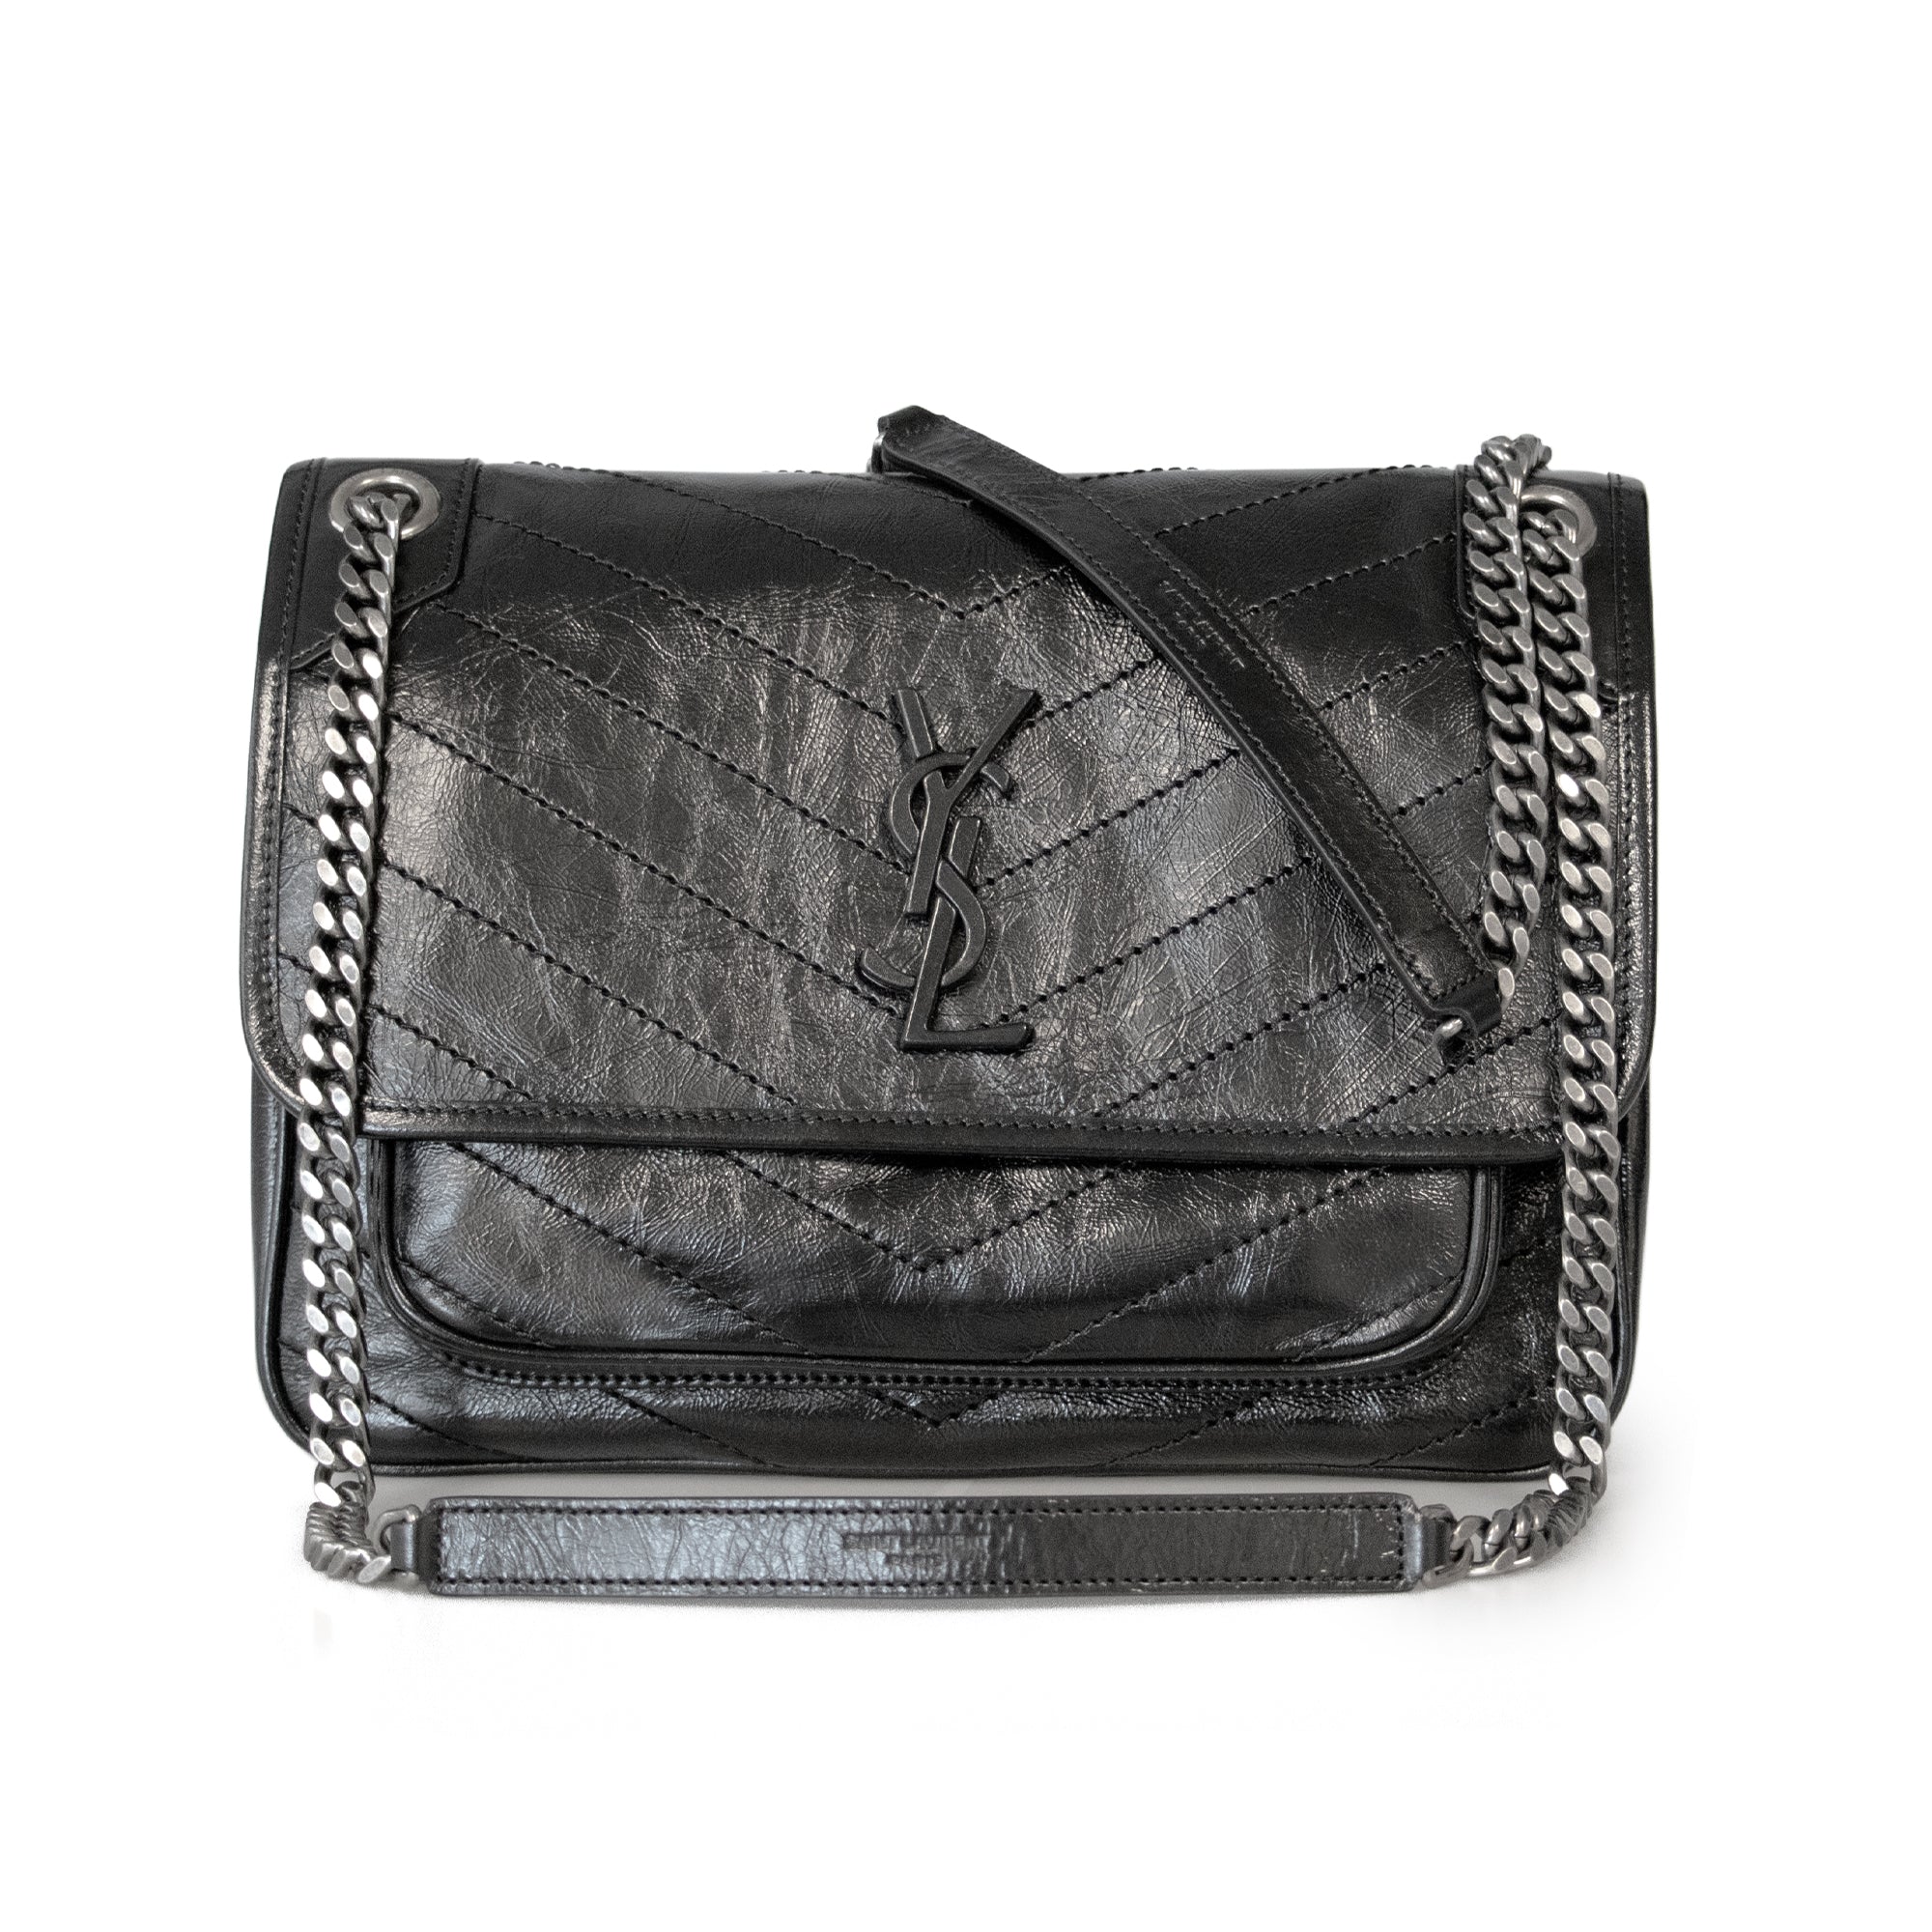 Saint Laurent Sac Patent Leather Hobo Bag